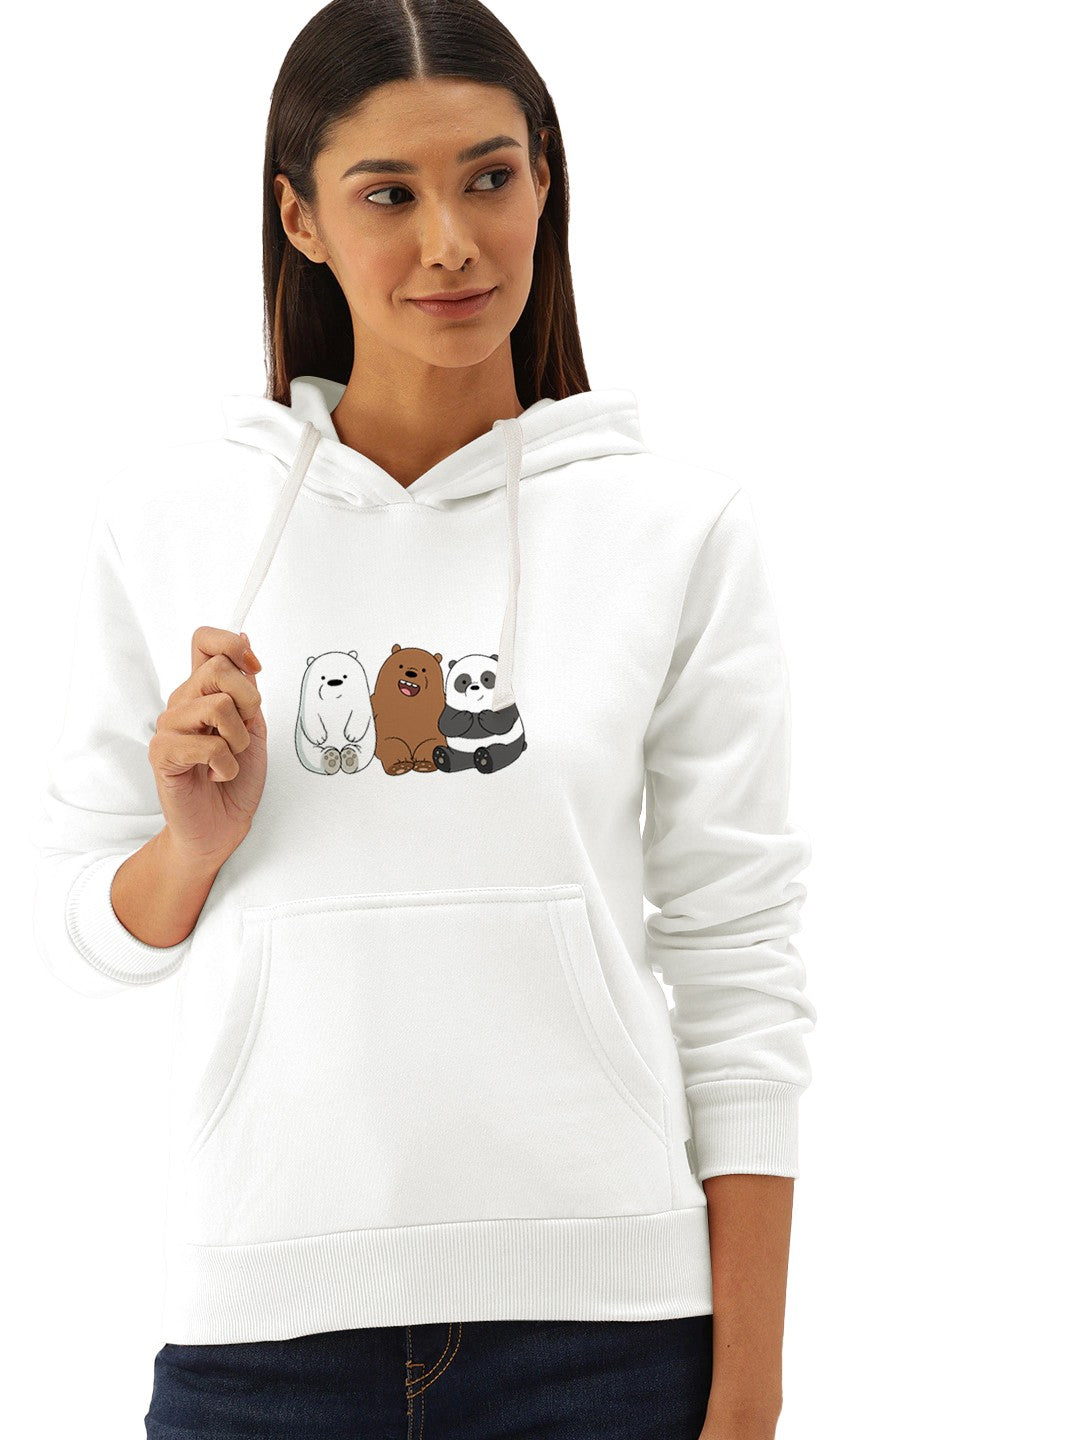 Panda Printed Premium Quality Hoodies For Women